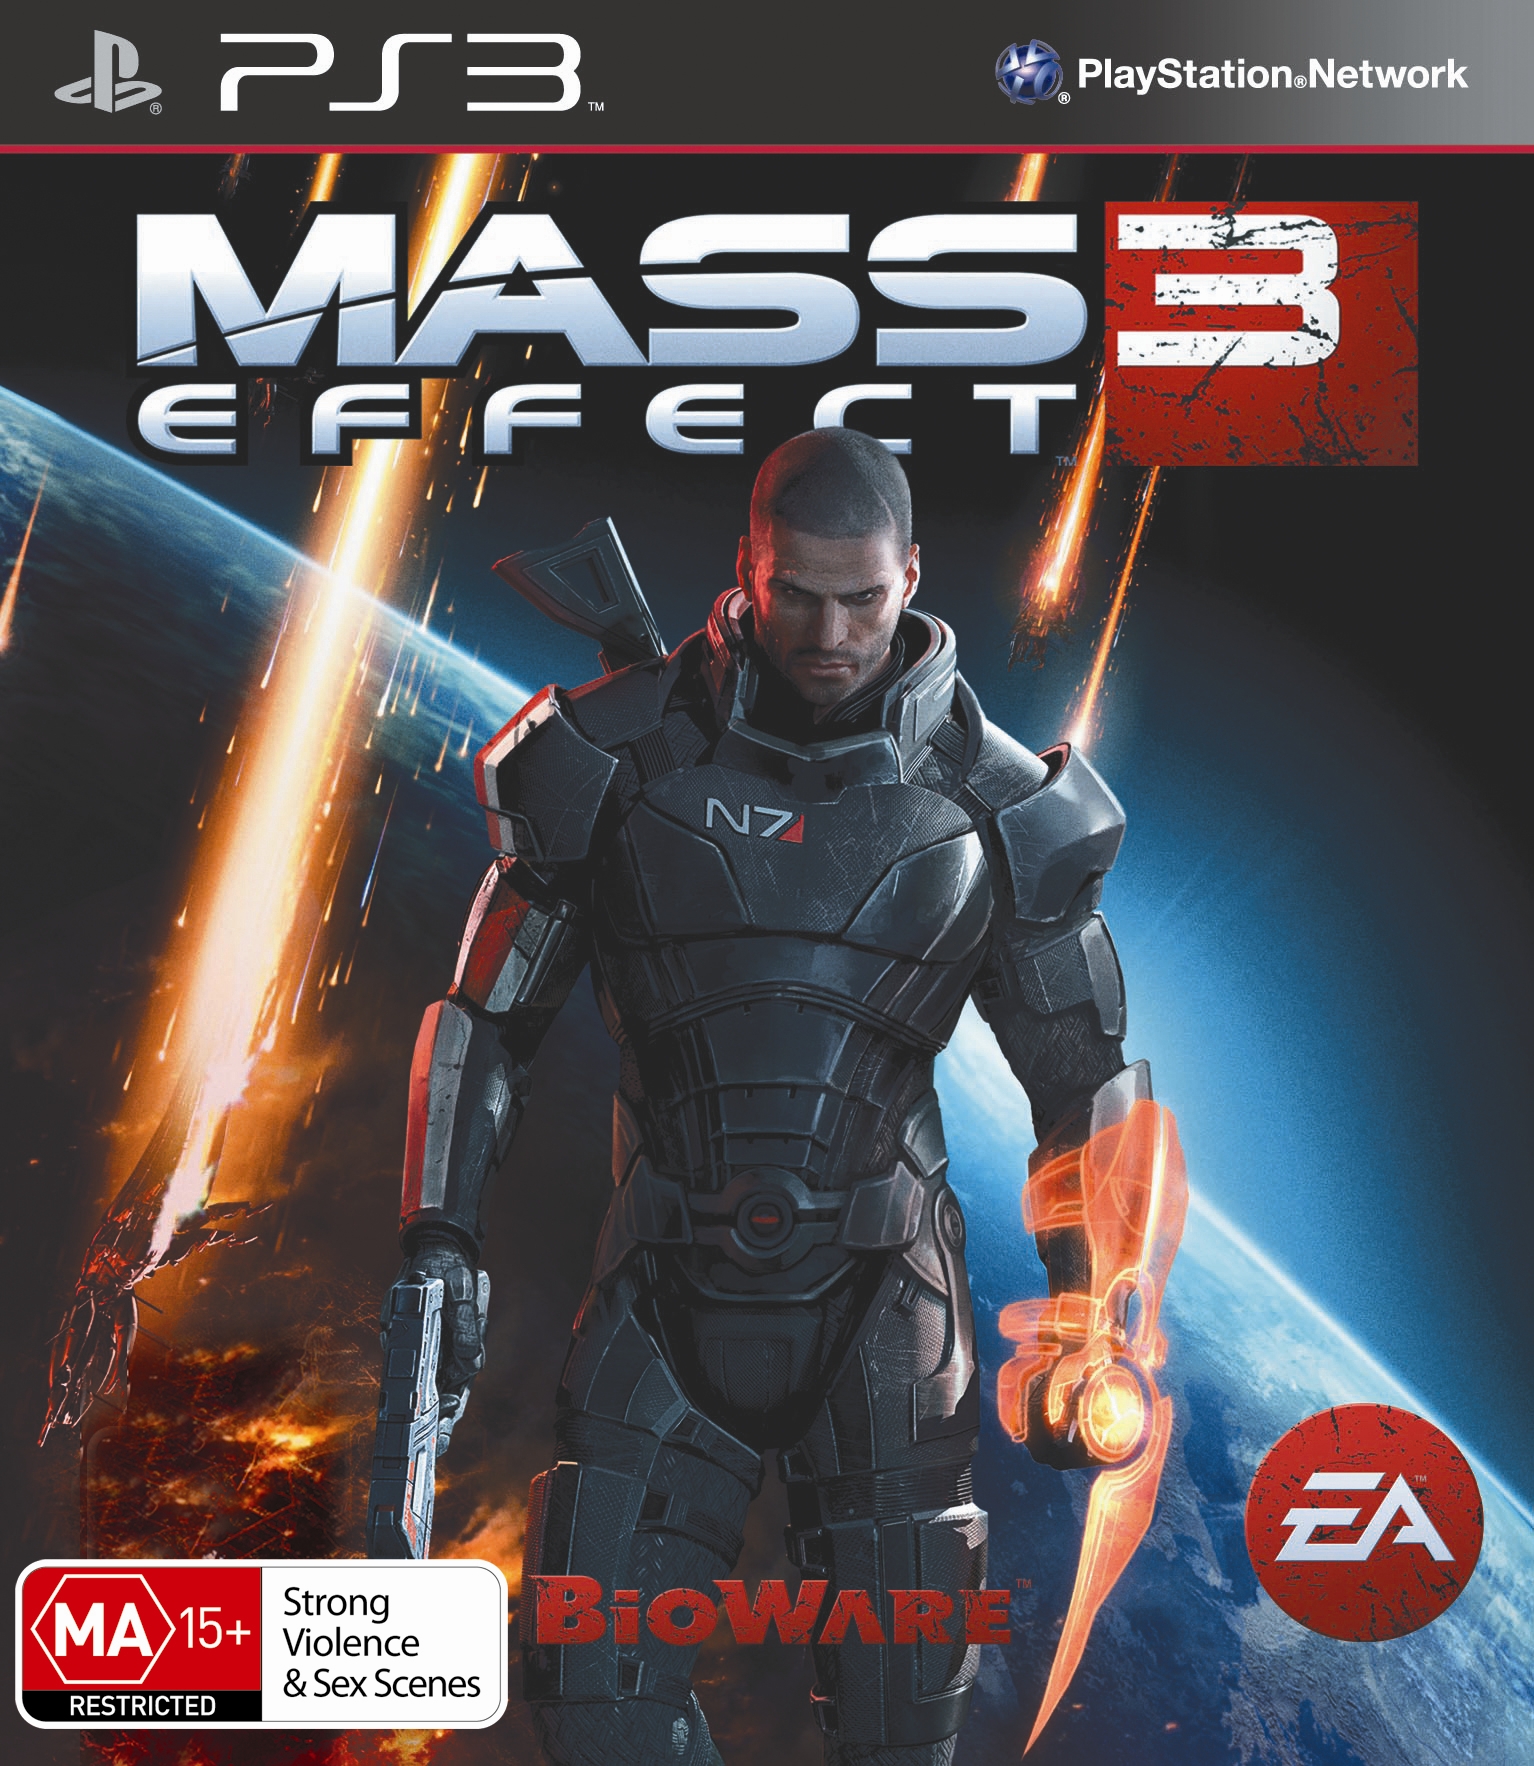 Mass Effect 3: Extended Cut officially announced